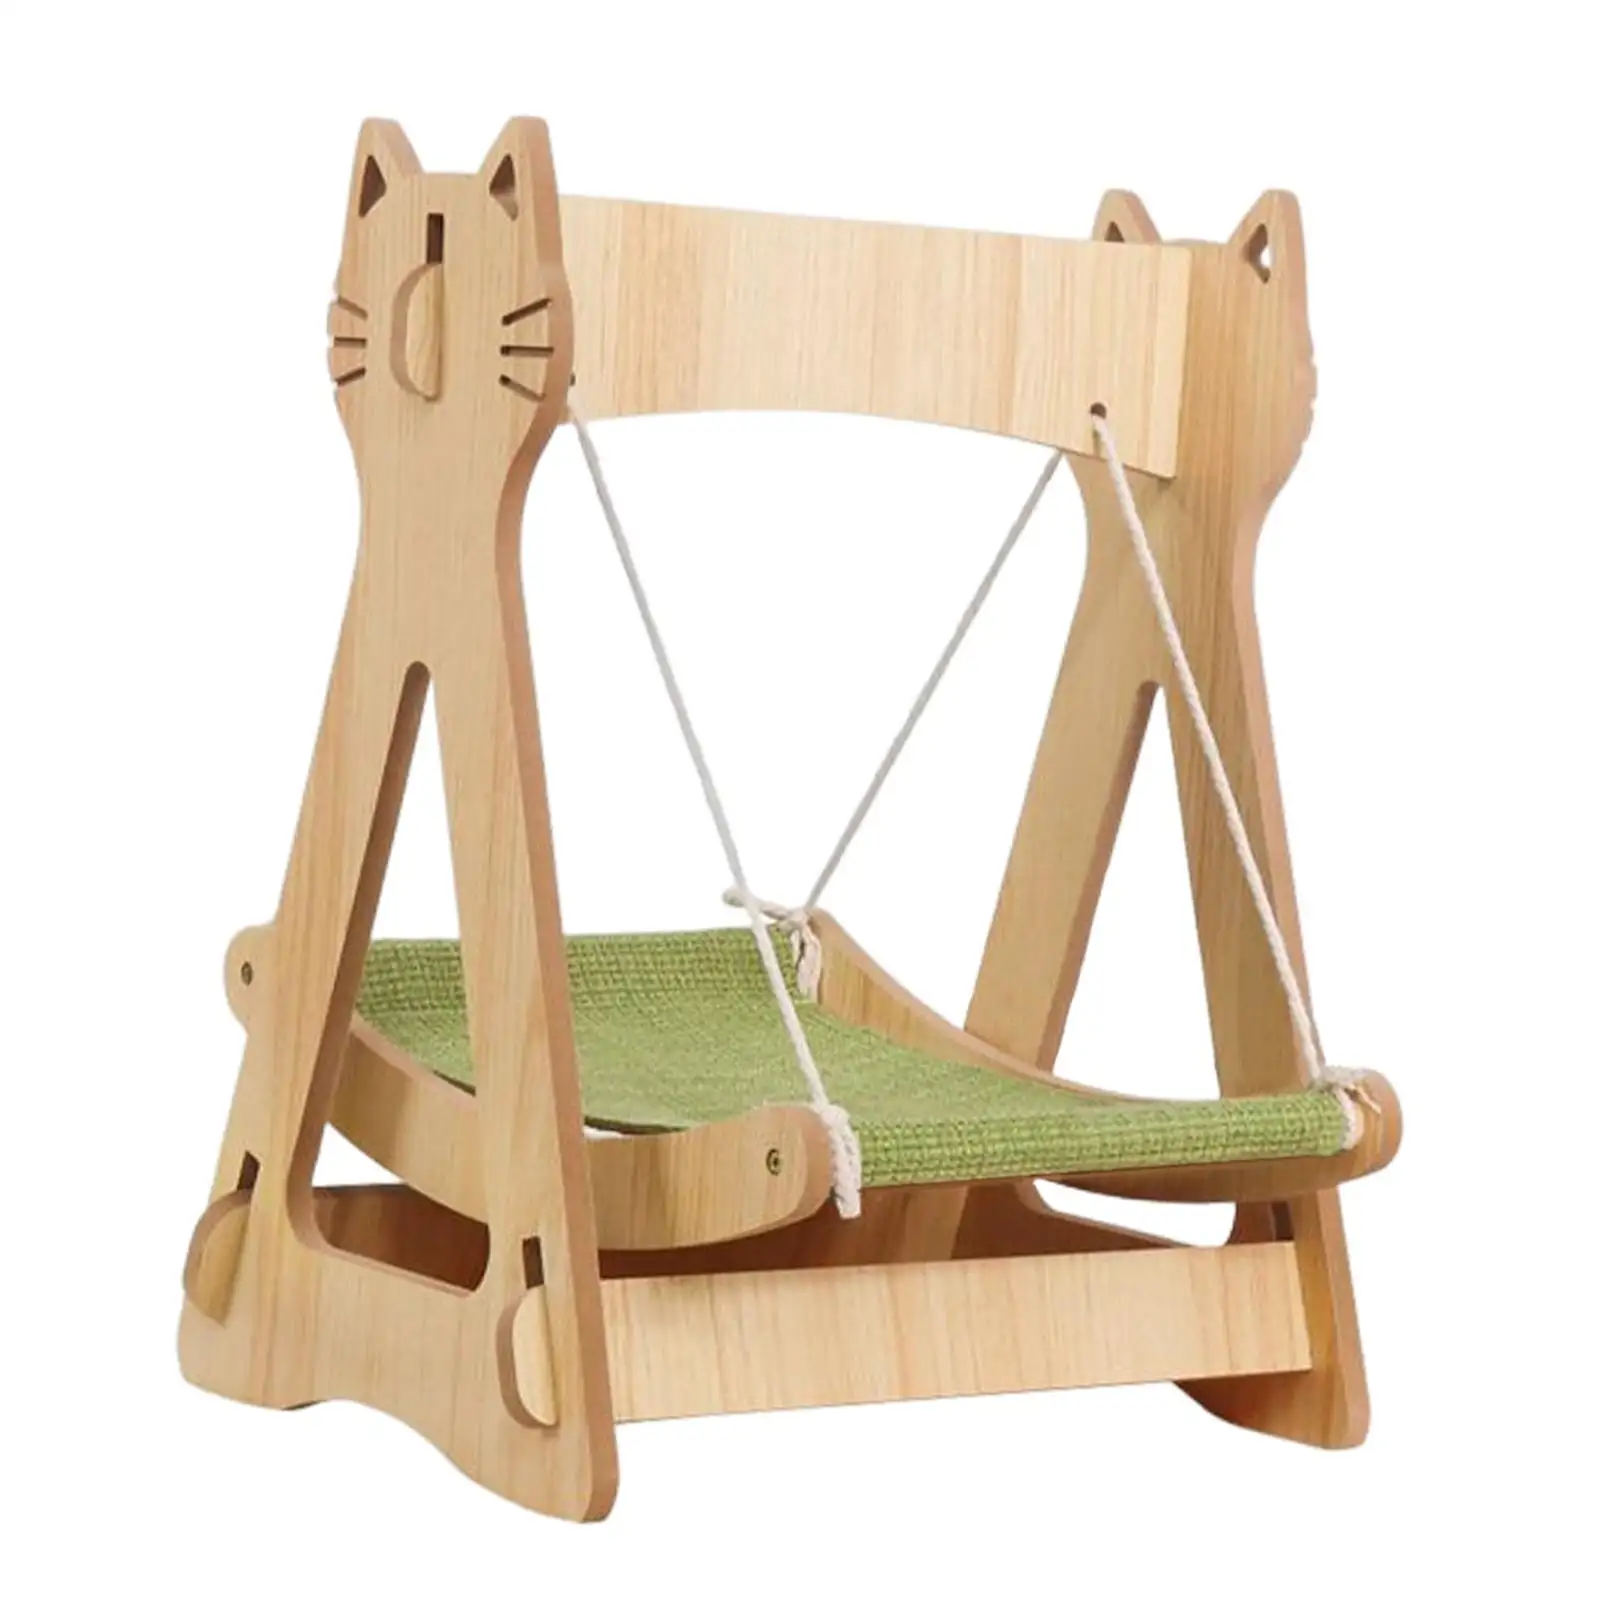 Grosir tempat tidur gantung kucing, kursi Kucing tempat tidur gantung hewan peliharaan bingkai kayu tahan lama untuk hewan peliharaan dalam ruangan lucu